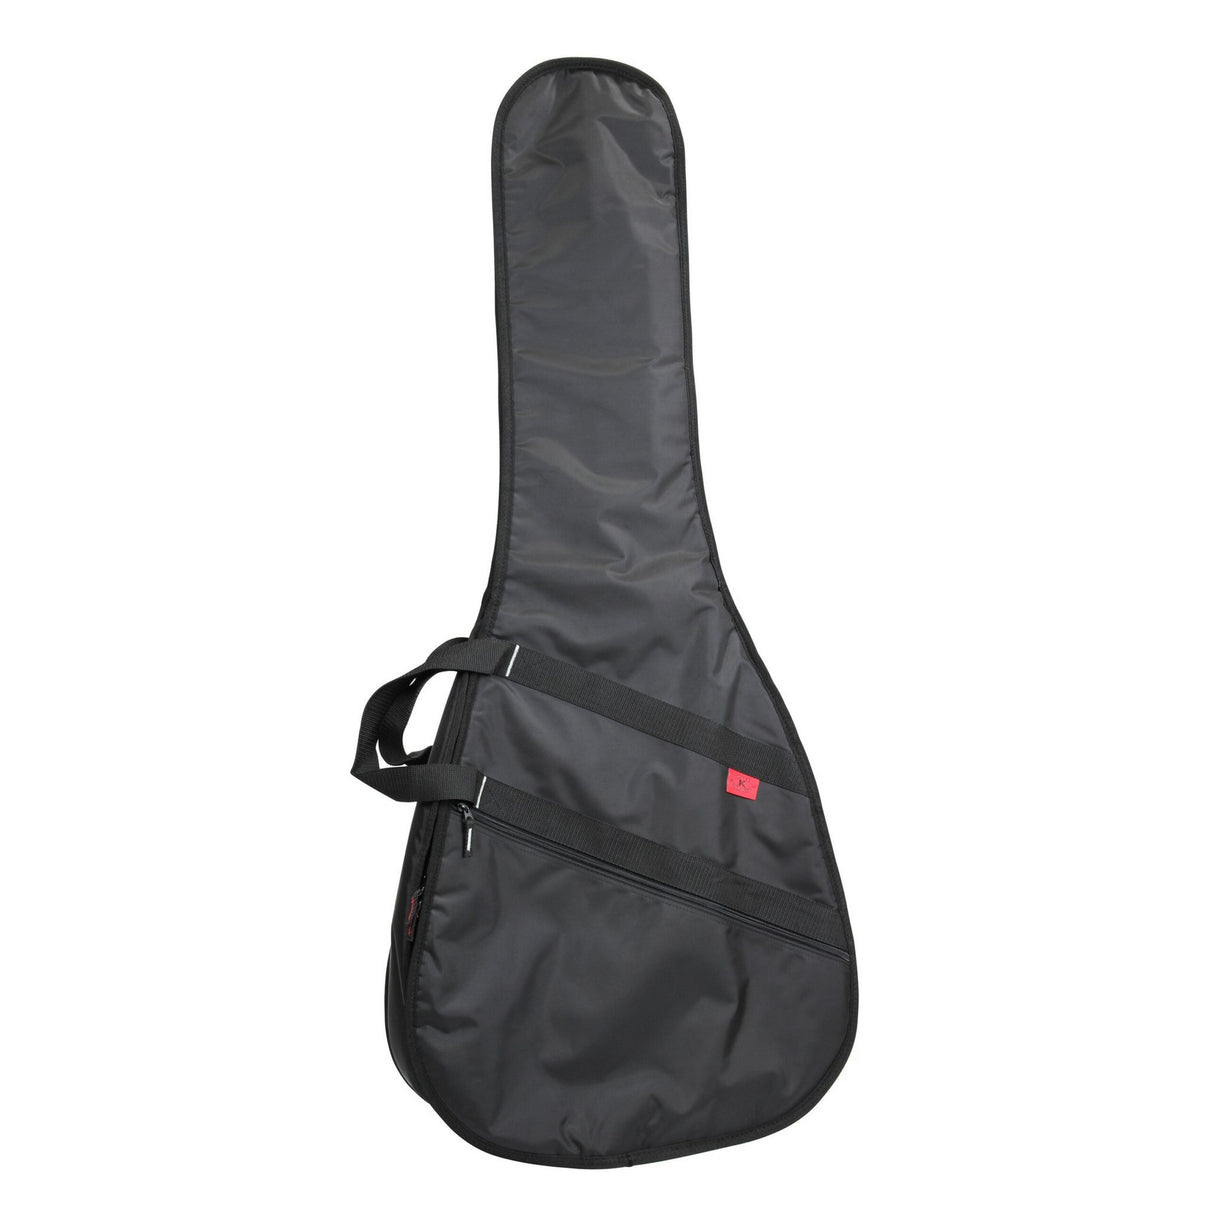 Kaces KXA34 RAZOR Xpress 3/4 or 1/2 size Acoustic Guitar Bag